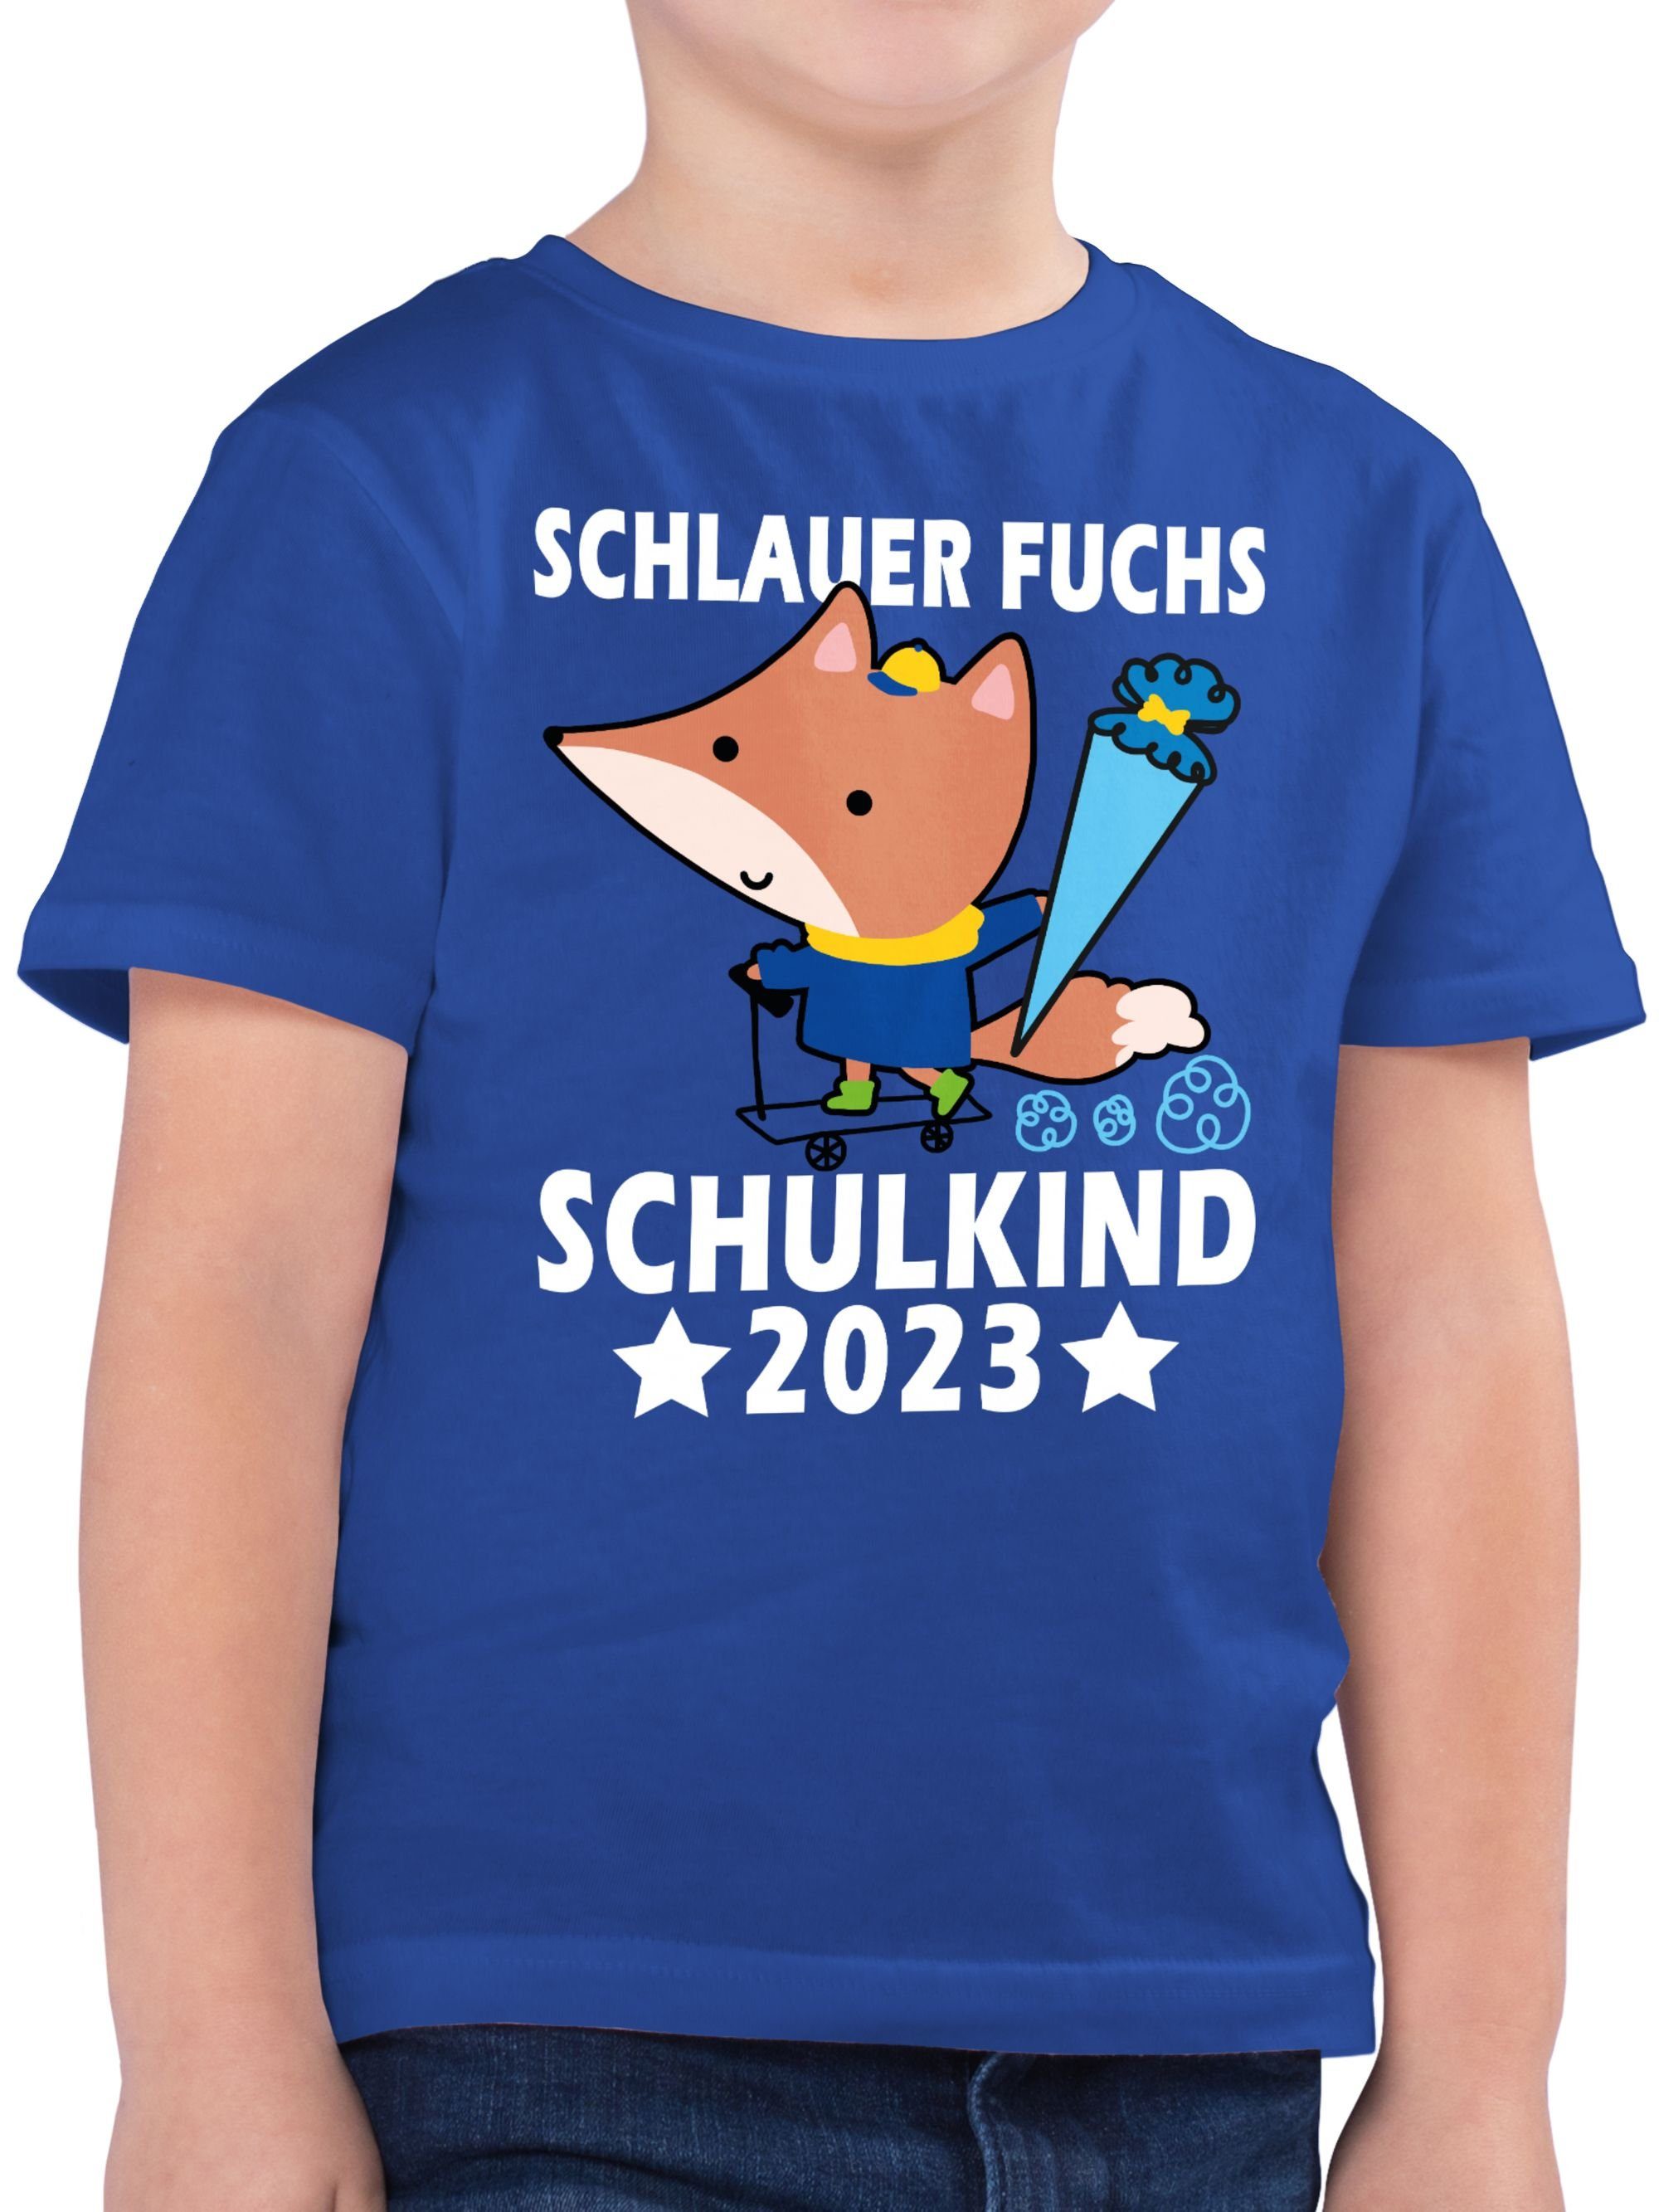 Shirtracer Schulkind Fuchs 2023 Geschenke Junge Schlauer Royalblau Schulanfang 01 Einschulung T-Shirt